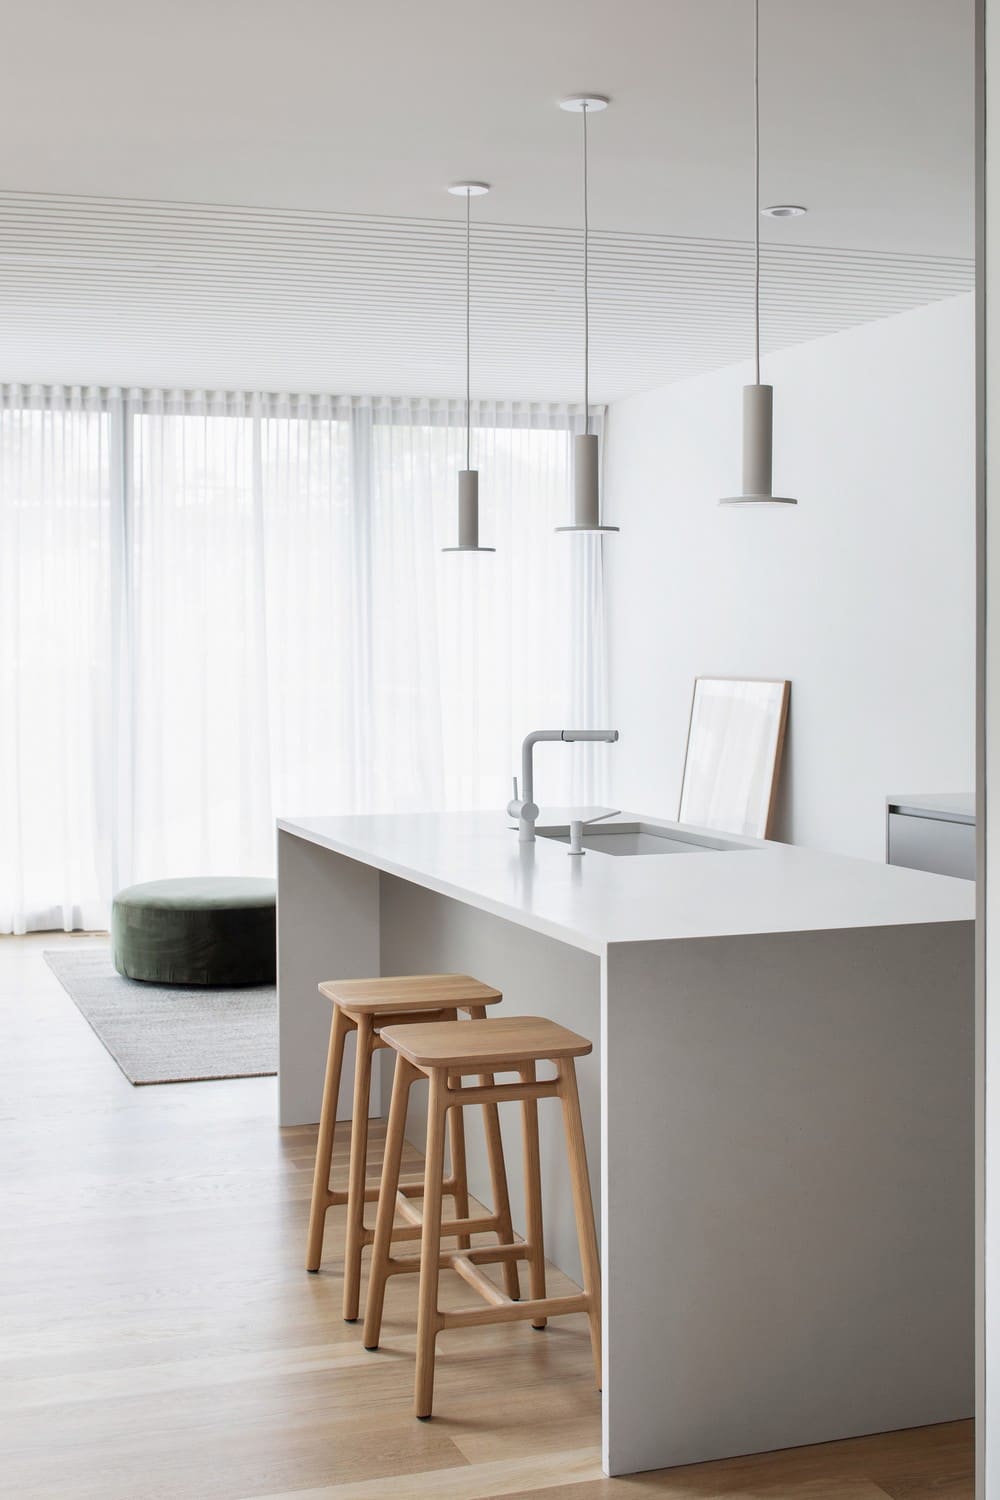 kitchen, Architecture Microclimat